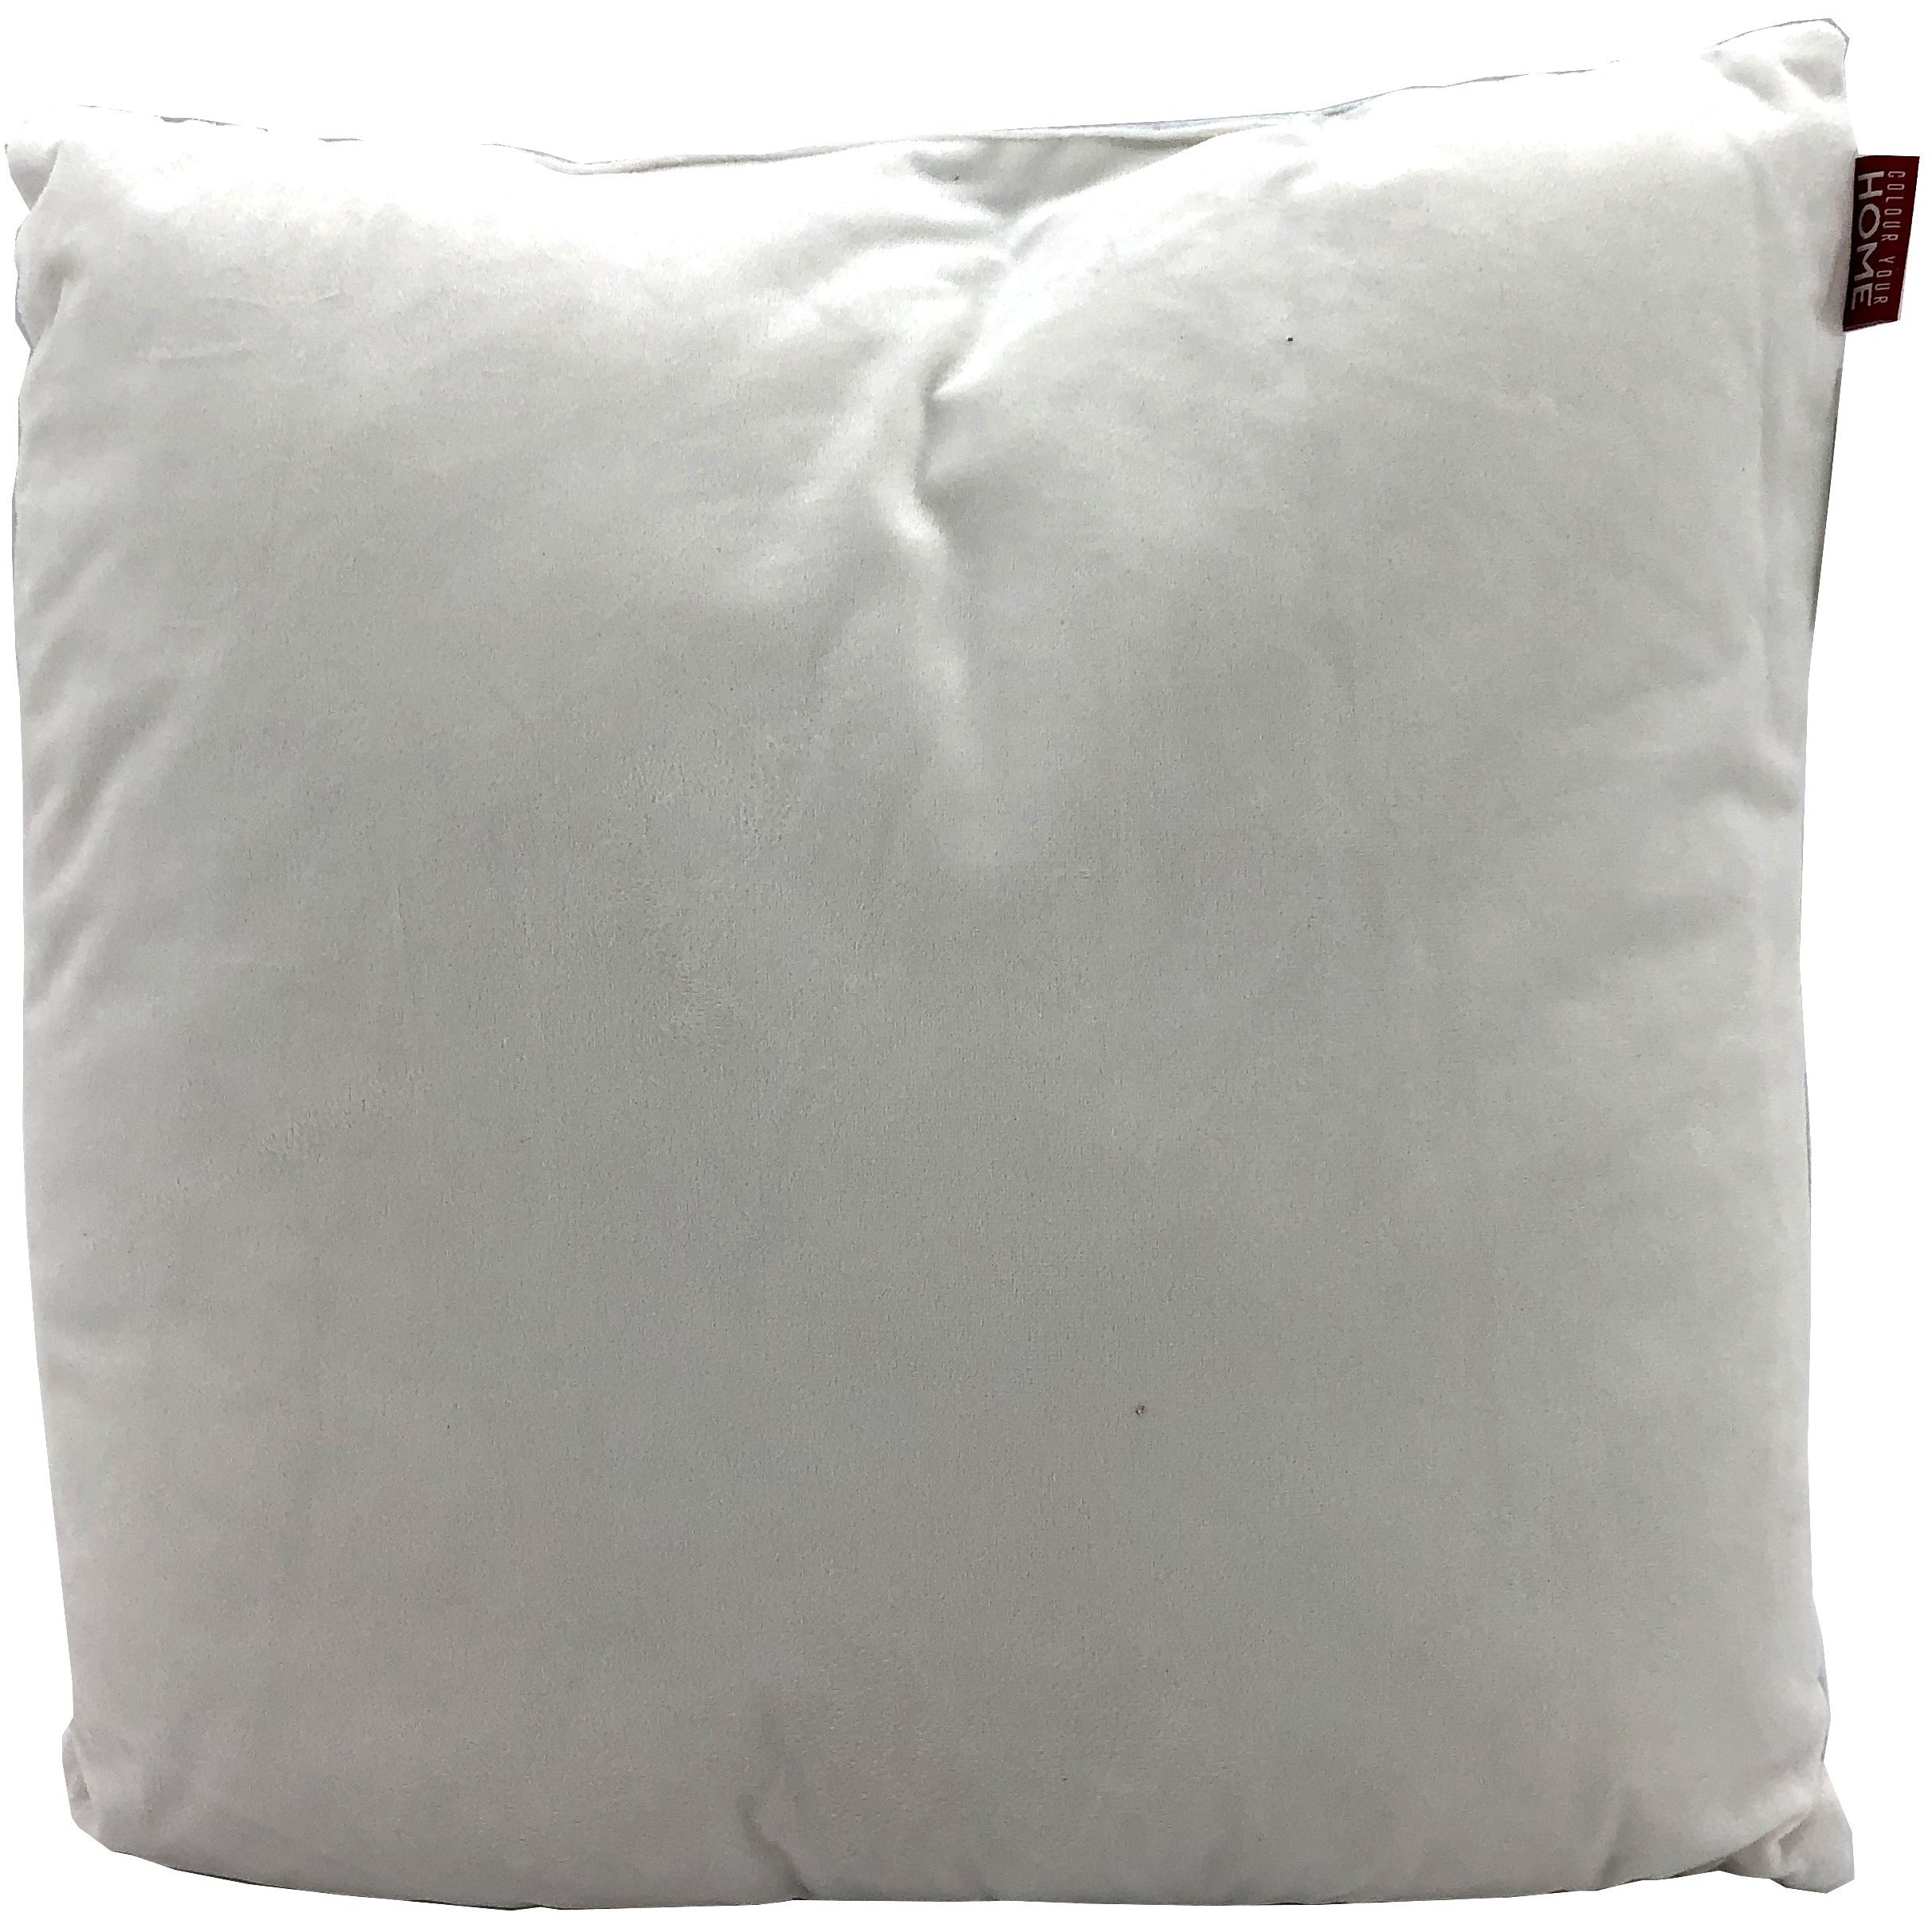 Wreath Christmas Pillow / Home Accent / Seasonal Decor / Couch Pillow / 17"x17"